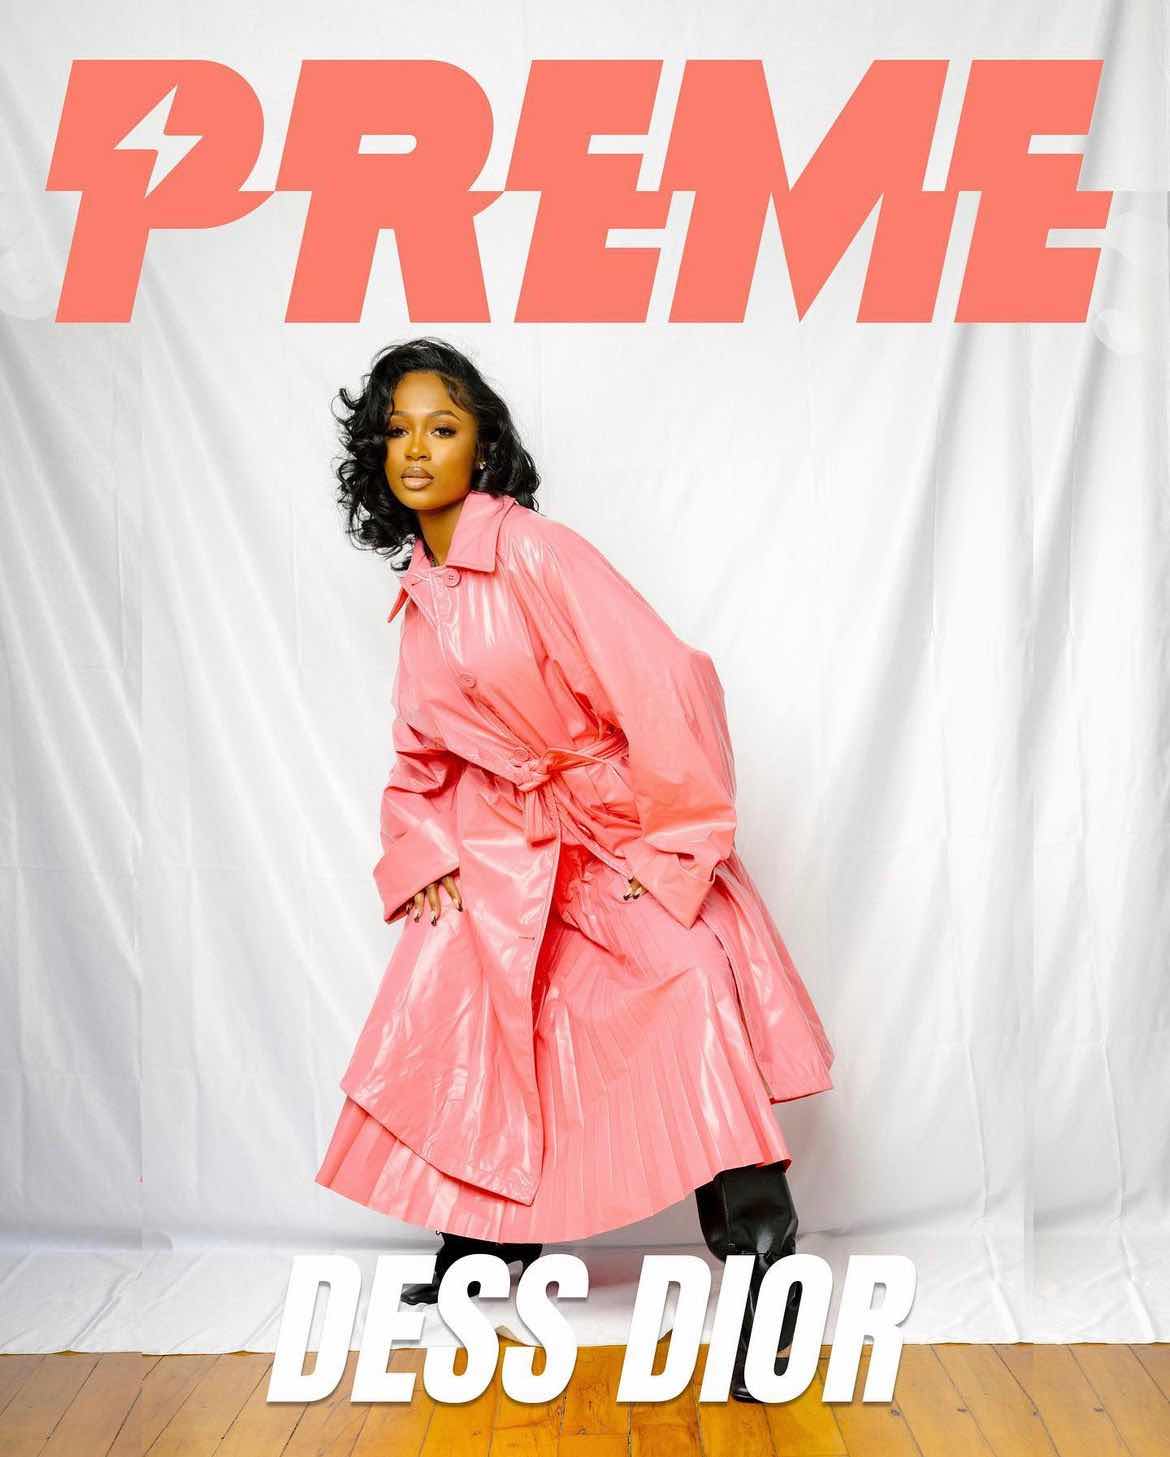 Preme Magazine ; Dess Dior, SUCCESS HAS ALWAYS FELT INEVITABLE!